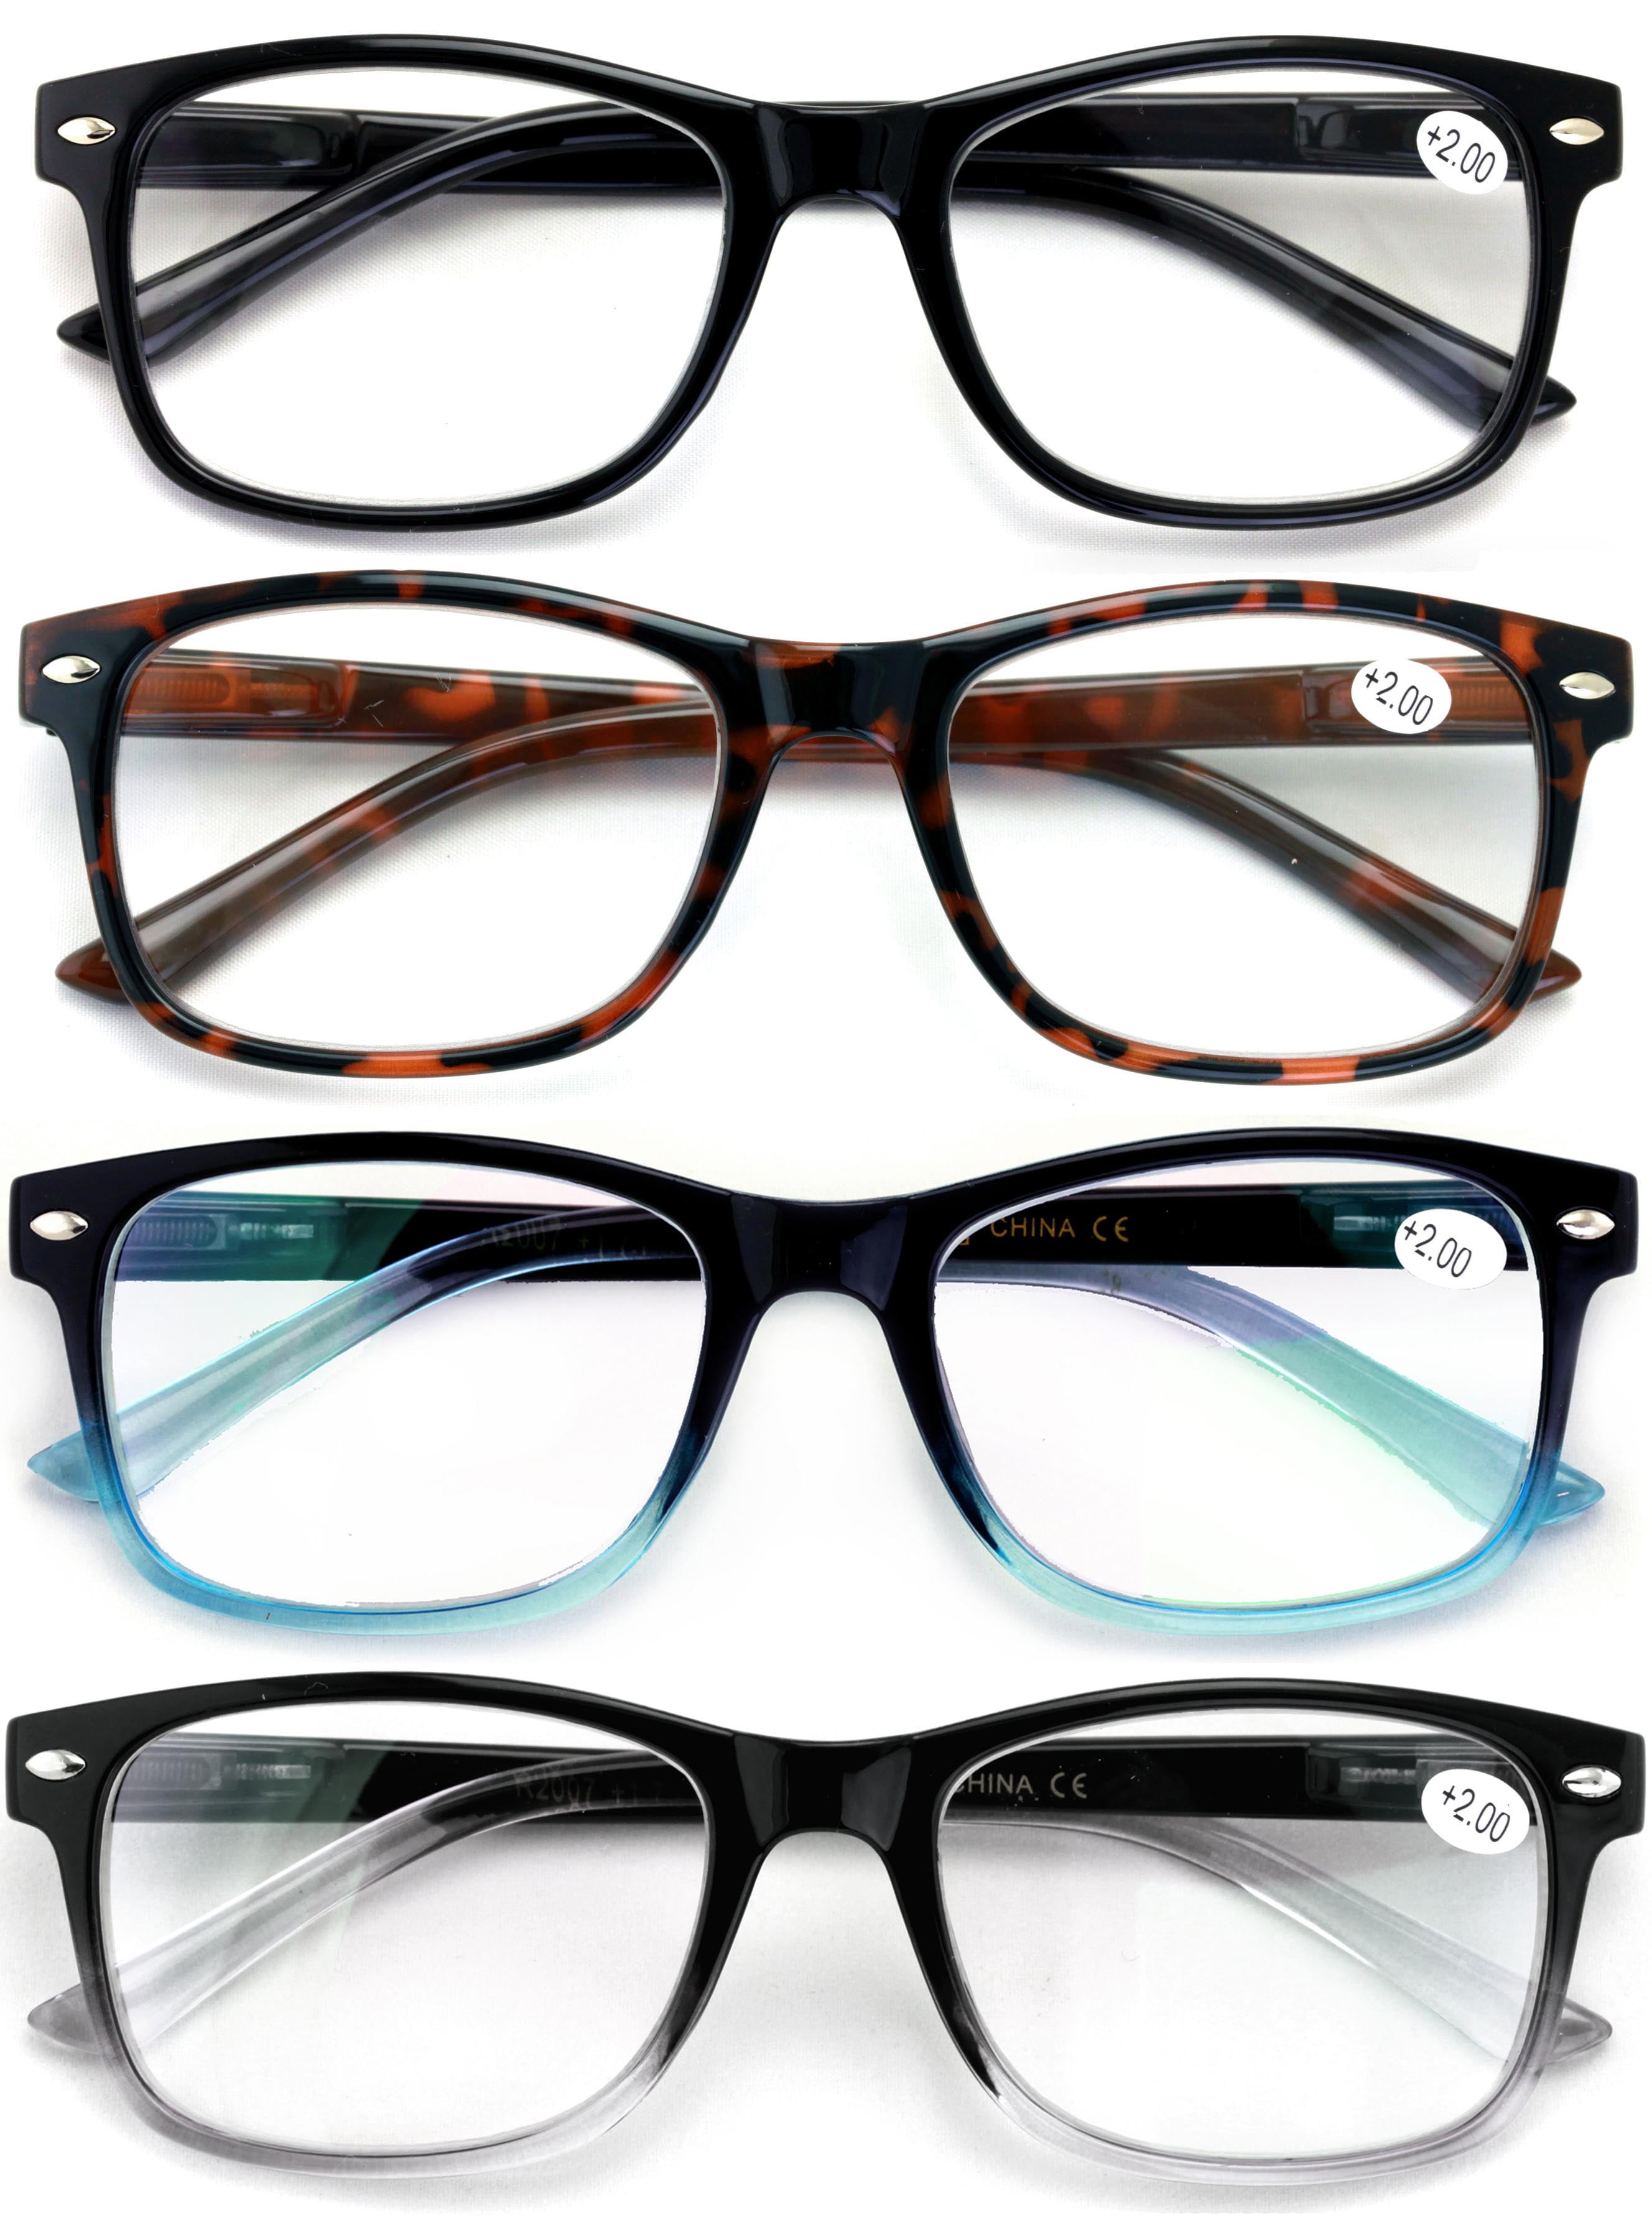 4 Pair Reading Glasses Blue Light Blocking, Filter UV Ray/Glare